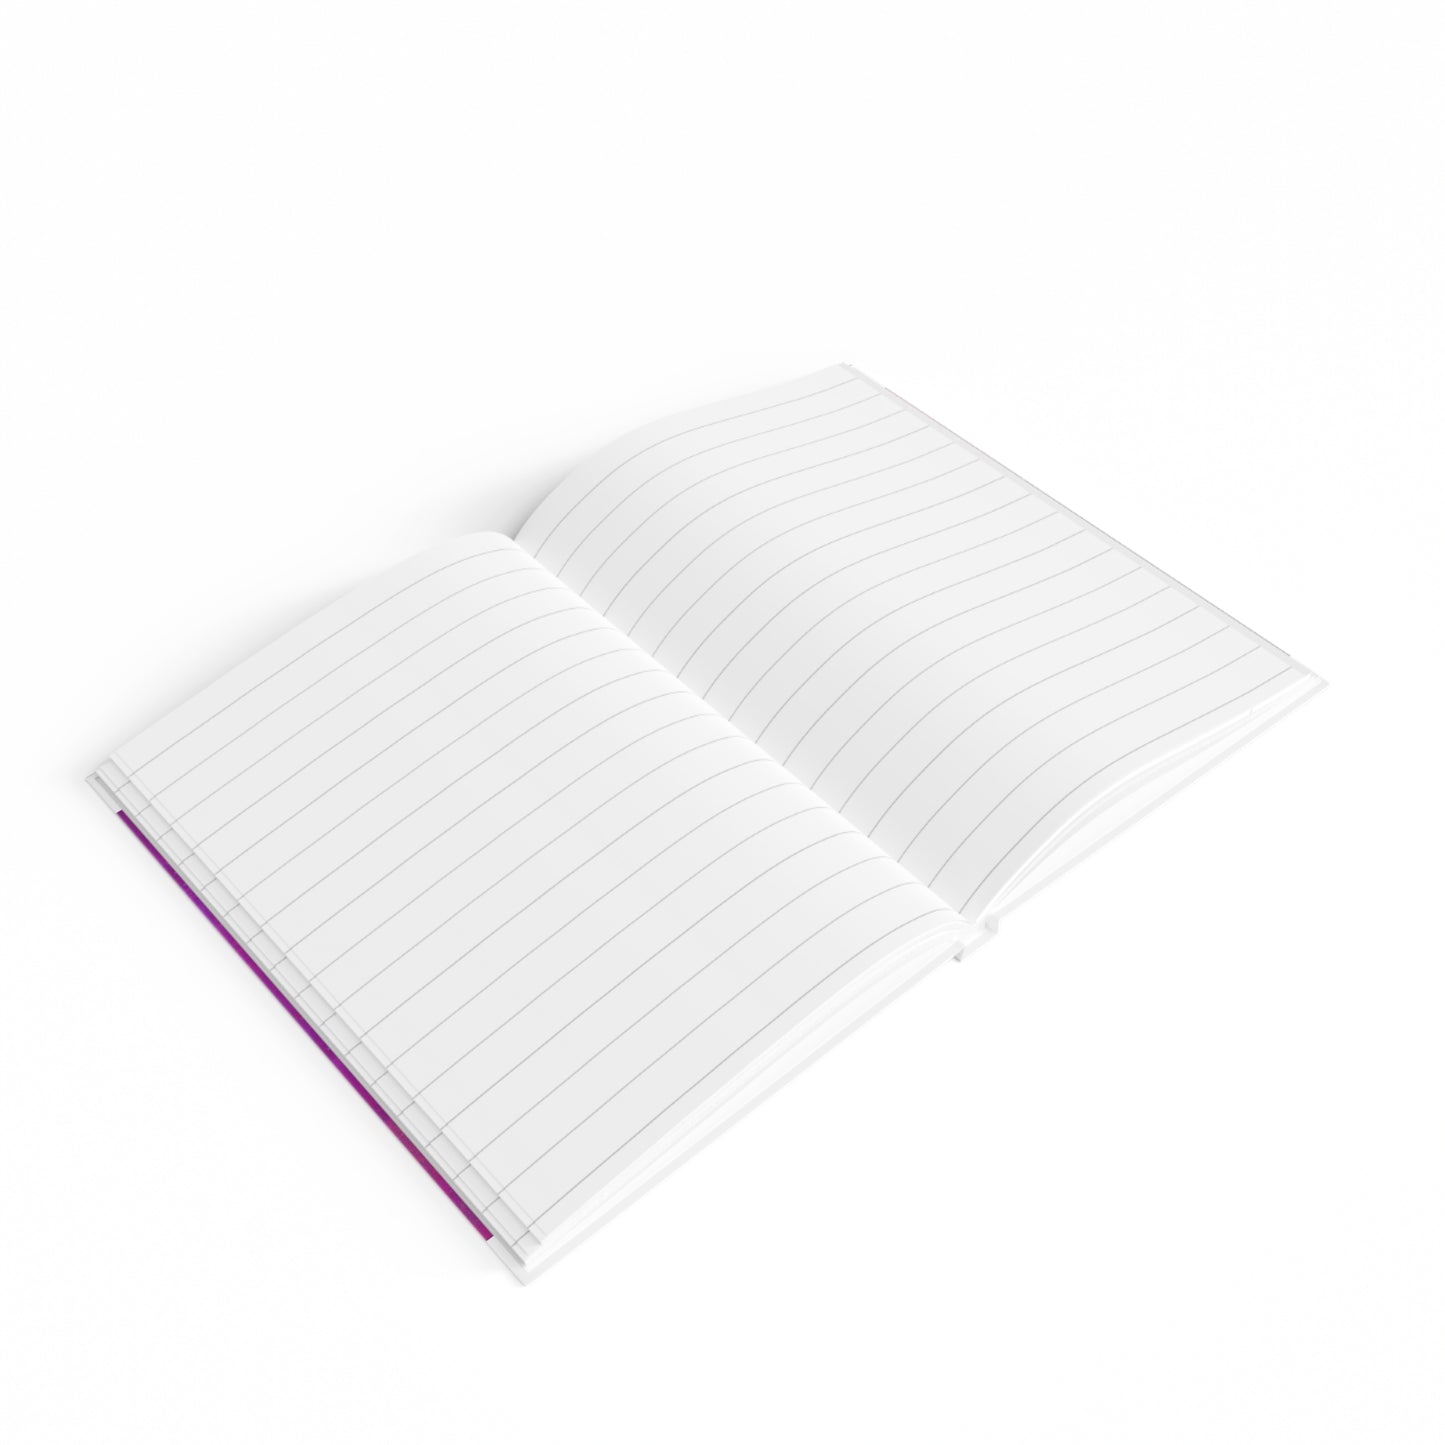 Venus Libra Hardcover Journal - Ruled Line